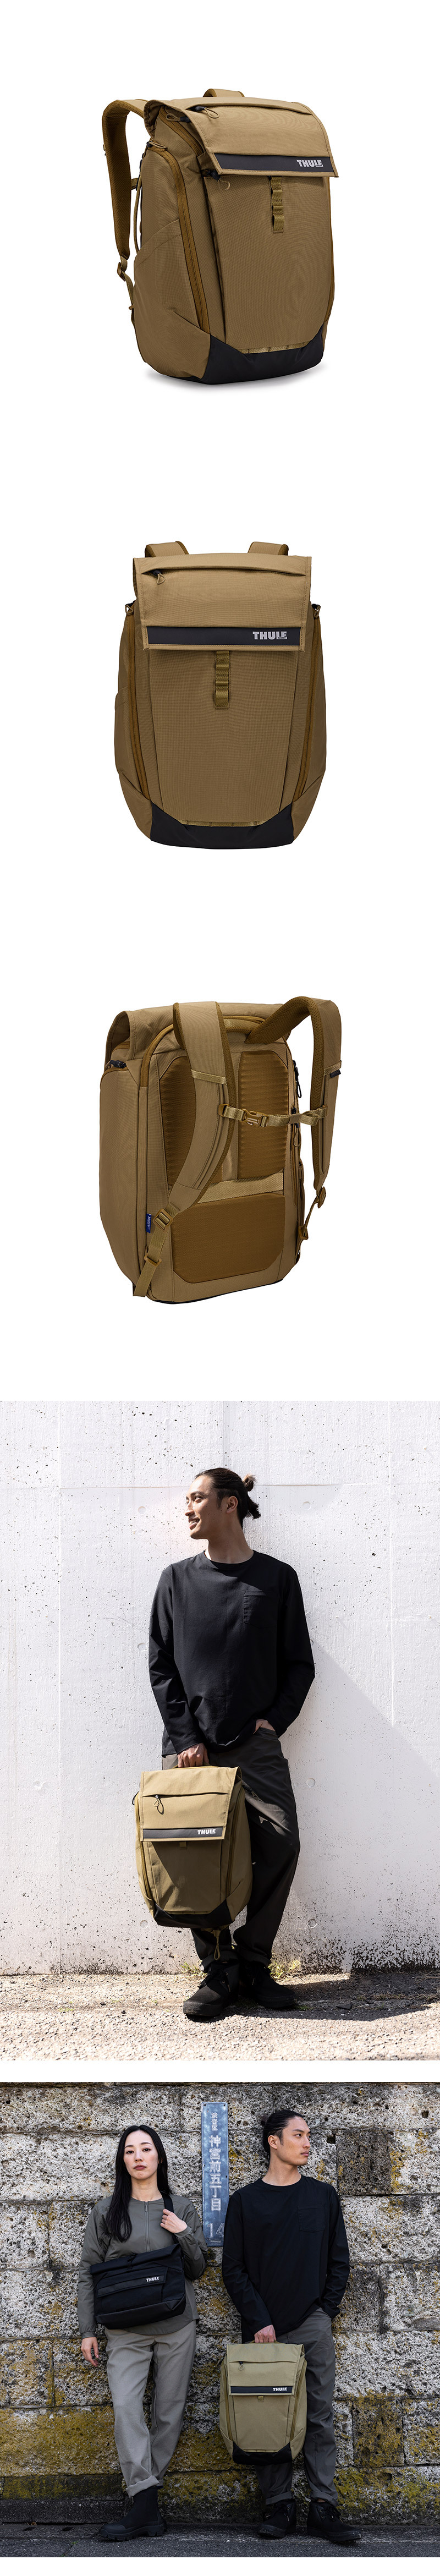 paramount-backpack-27l-04.jpg